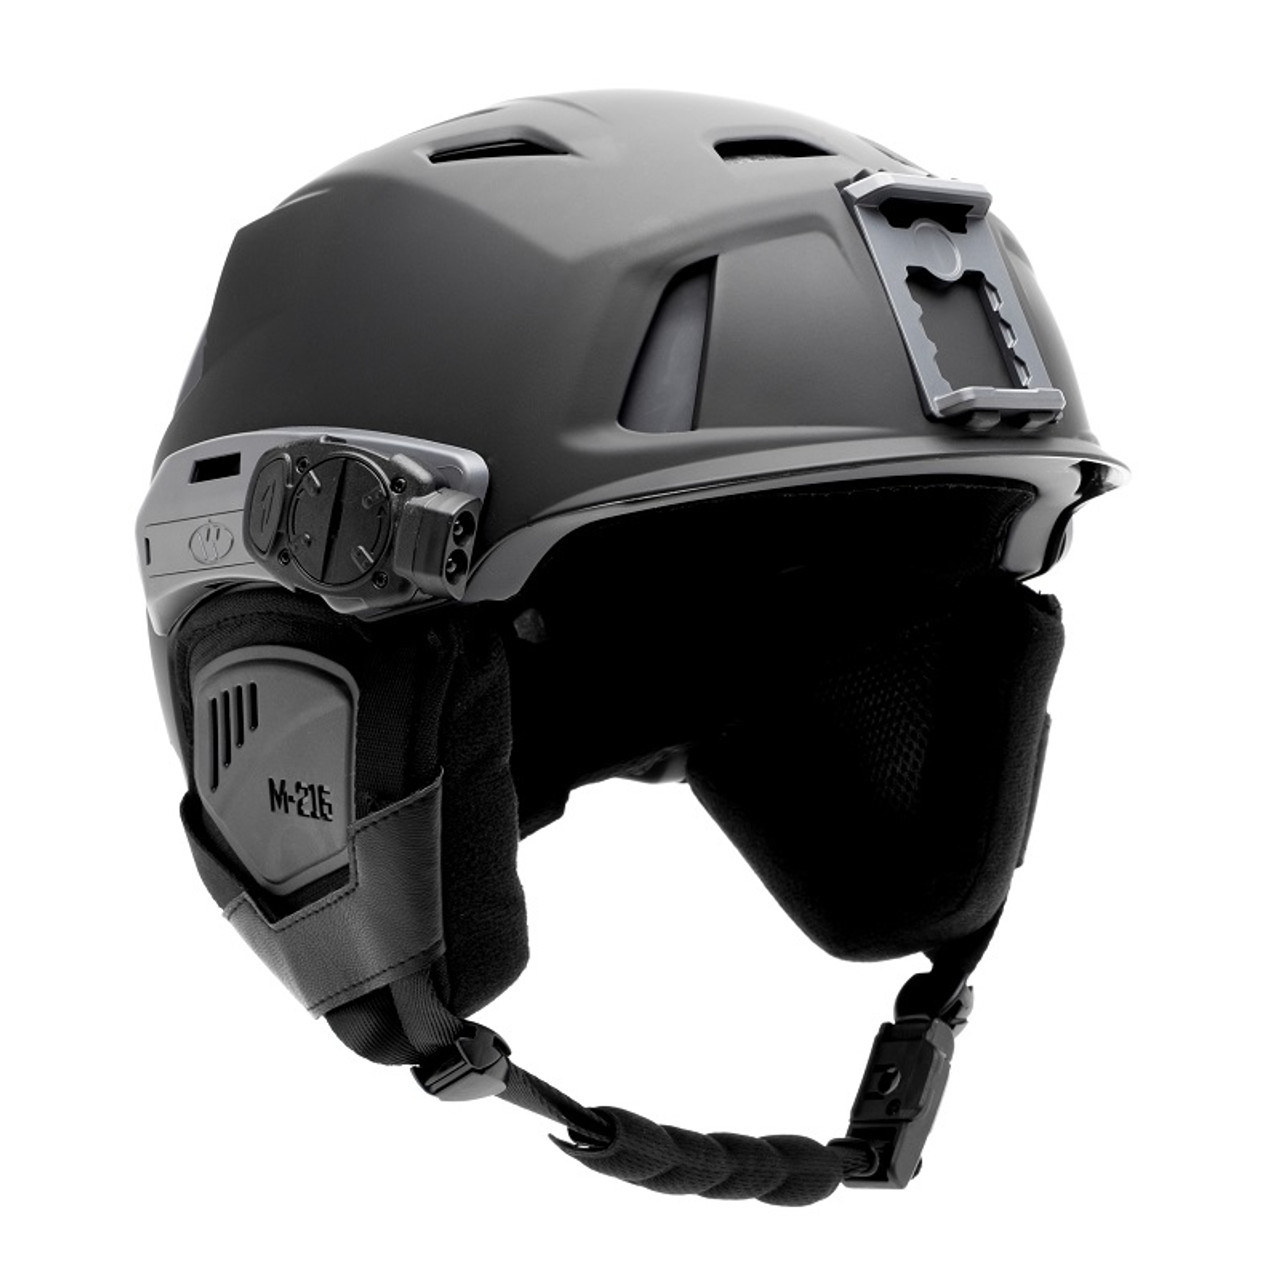 Team Wendy® M-216™ Ski Helmet